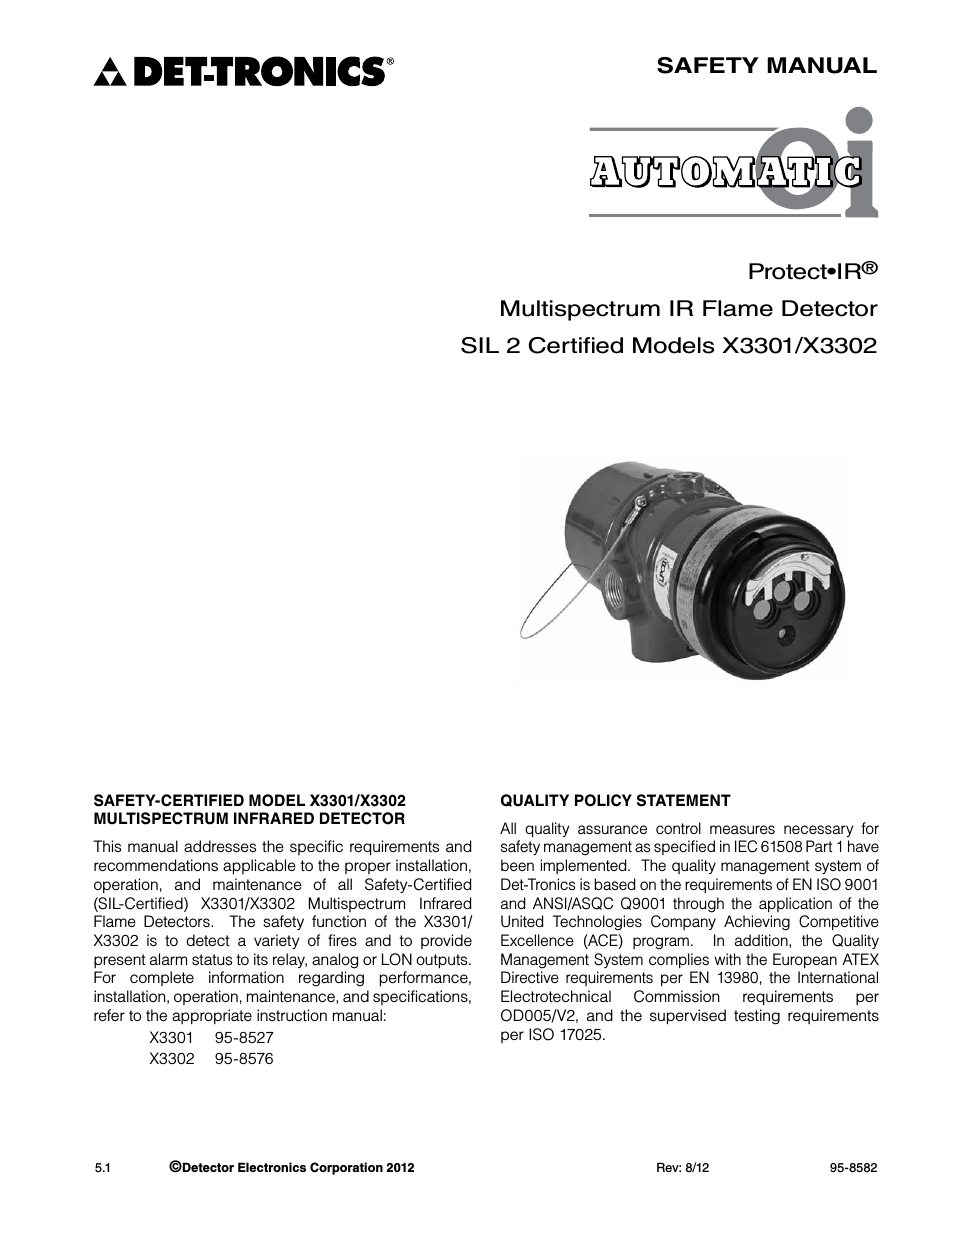 X3301 Multispectrum IR Flame Detector SAFETY MANUAL